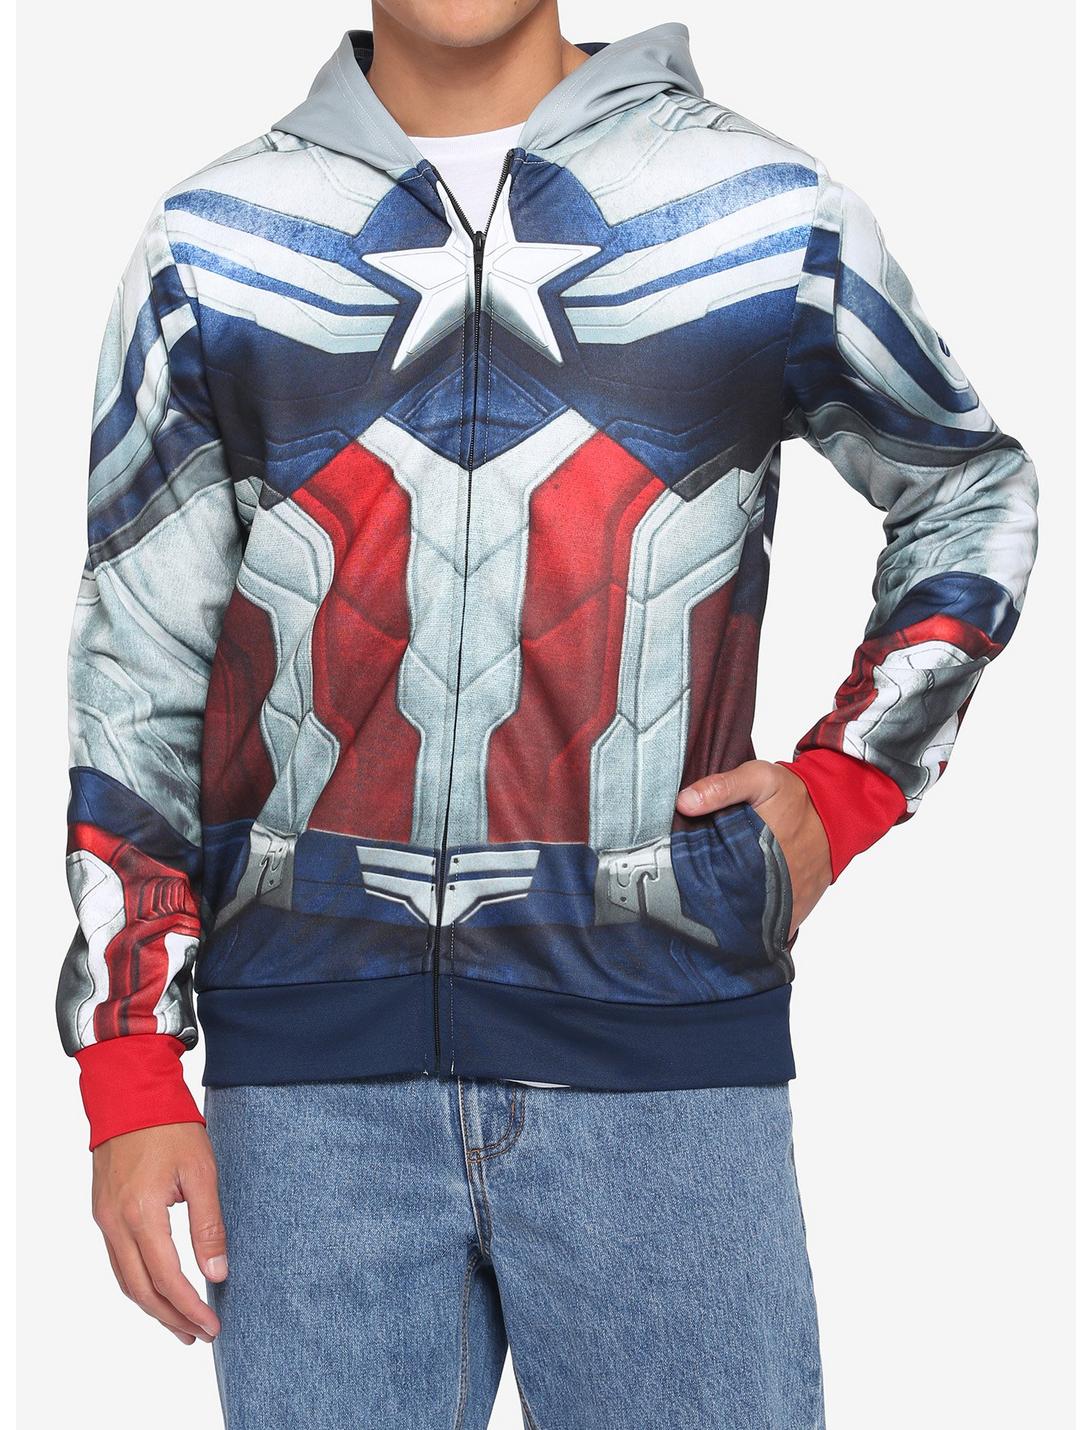 Winter Soldier Captain America Flash Falcon Star Lord Hoodie Jacket Sweatshirts